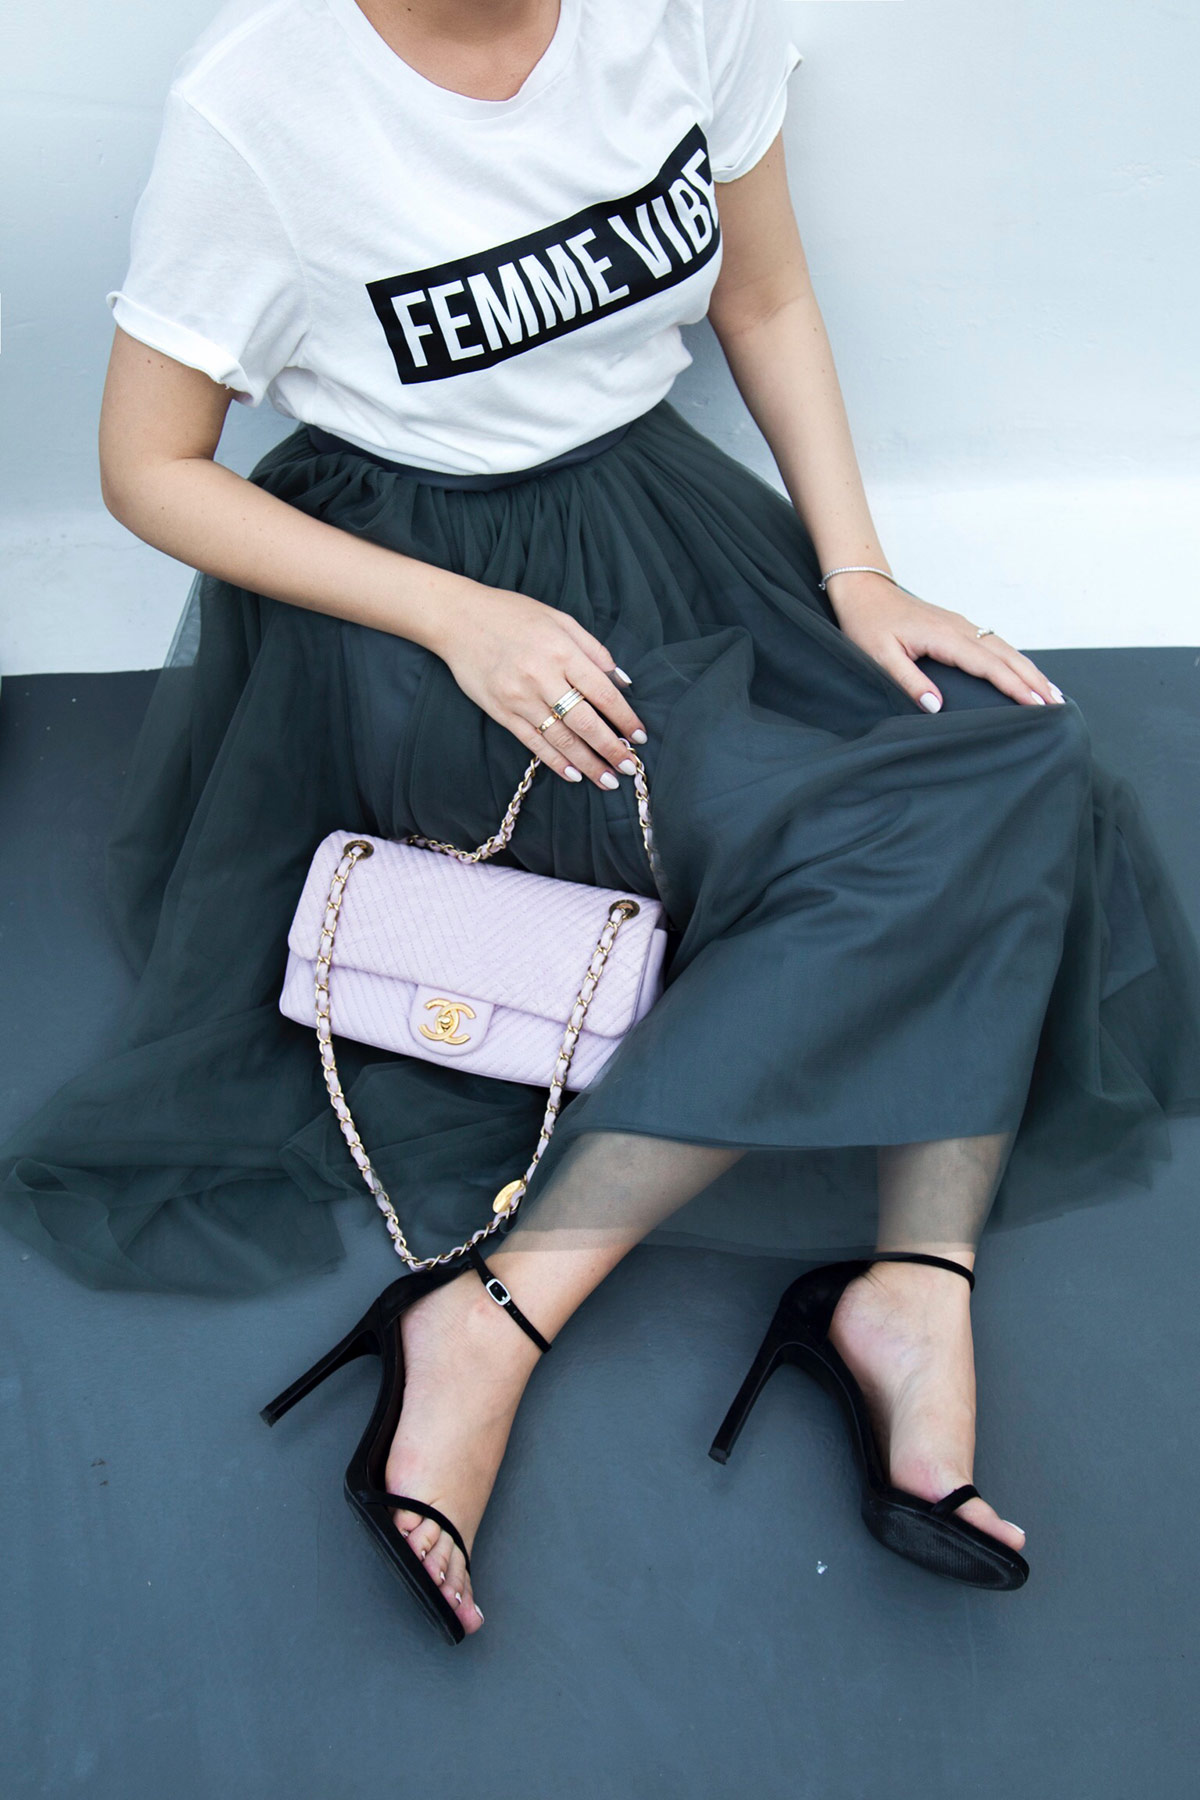 tulle skirt, pink Chanel bag & Stuart Weitzman "Nudist" sandals by Stella Asteria - Fashion & Lifestyle Blogger